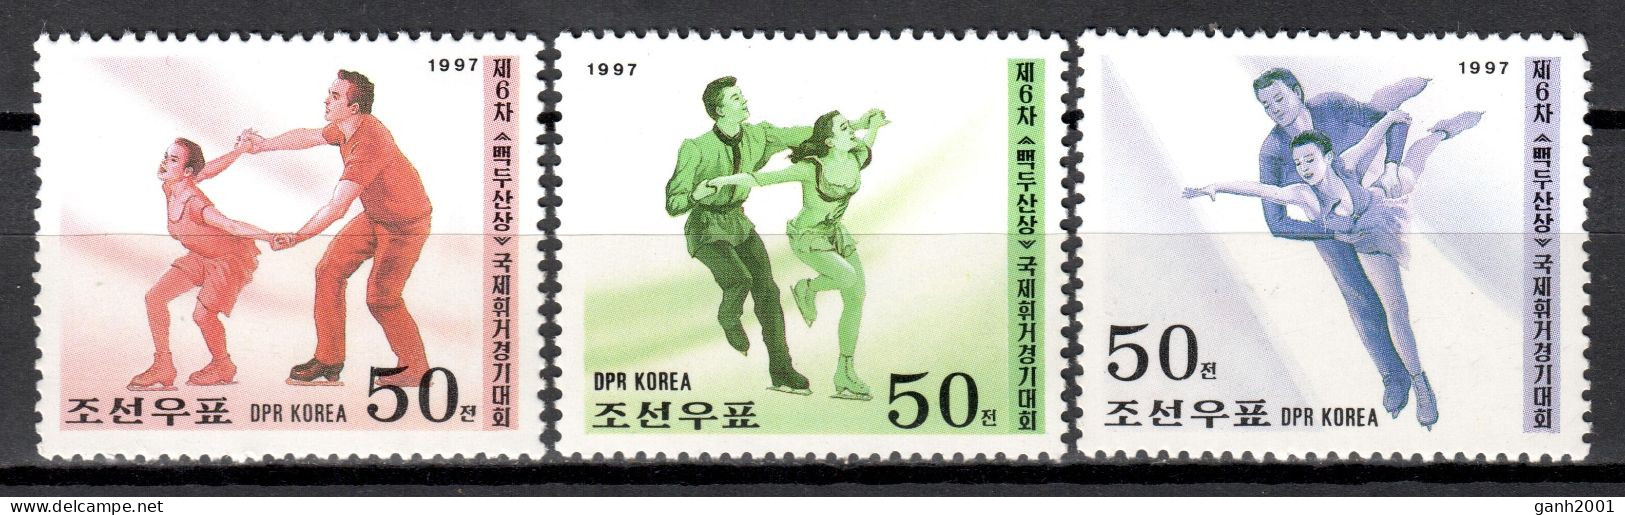 Korea North 1997 Corea / Figure Skating MNH Patinaje Artístico / Lx34  34-2 - Figure Skating